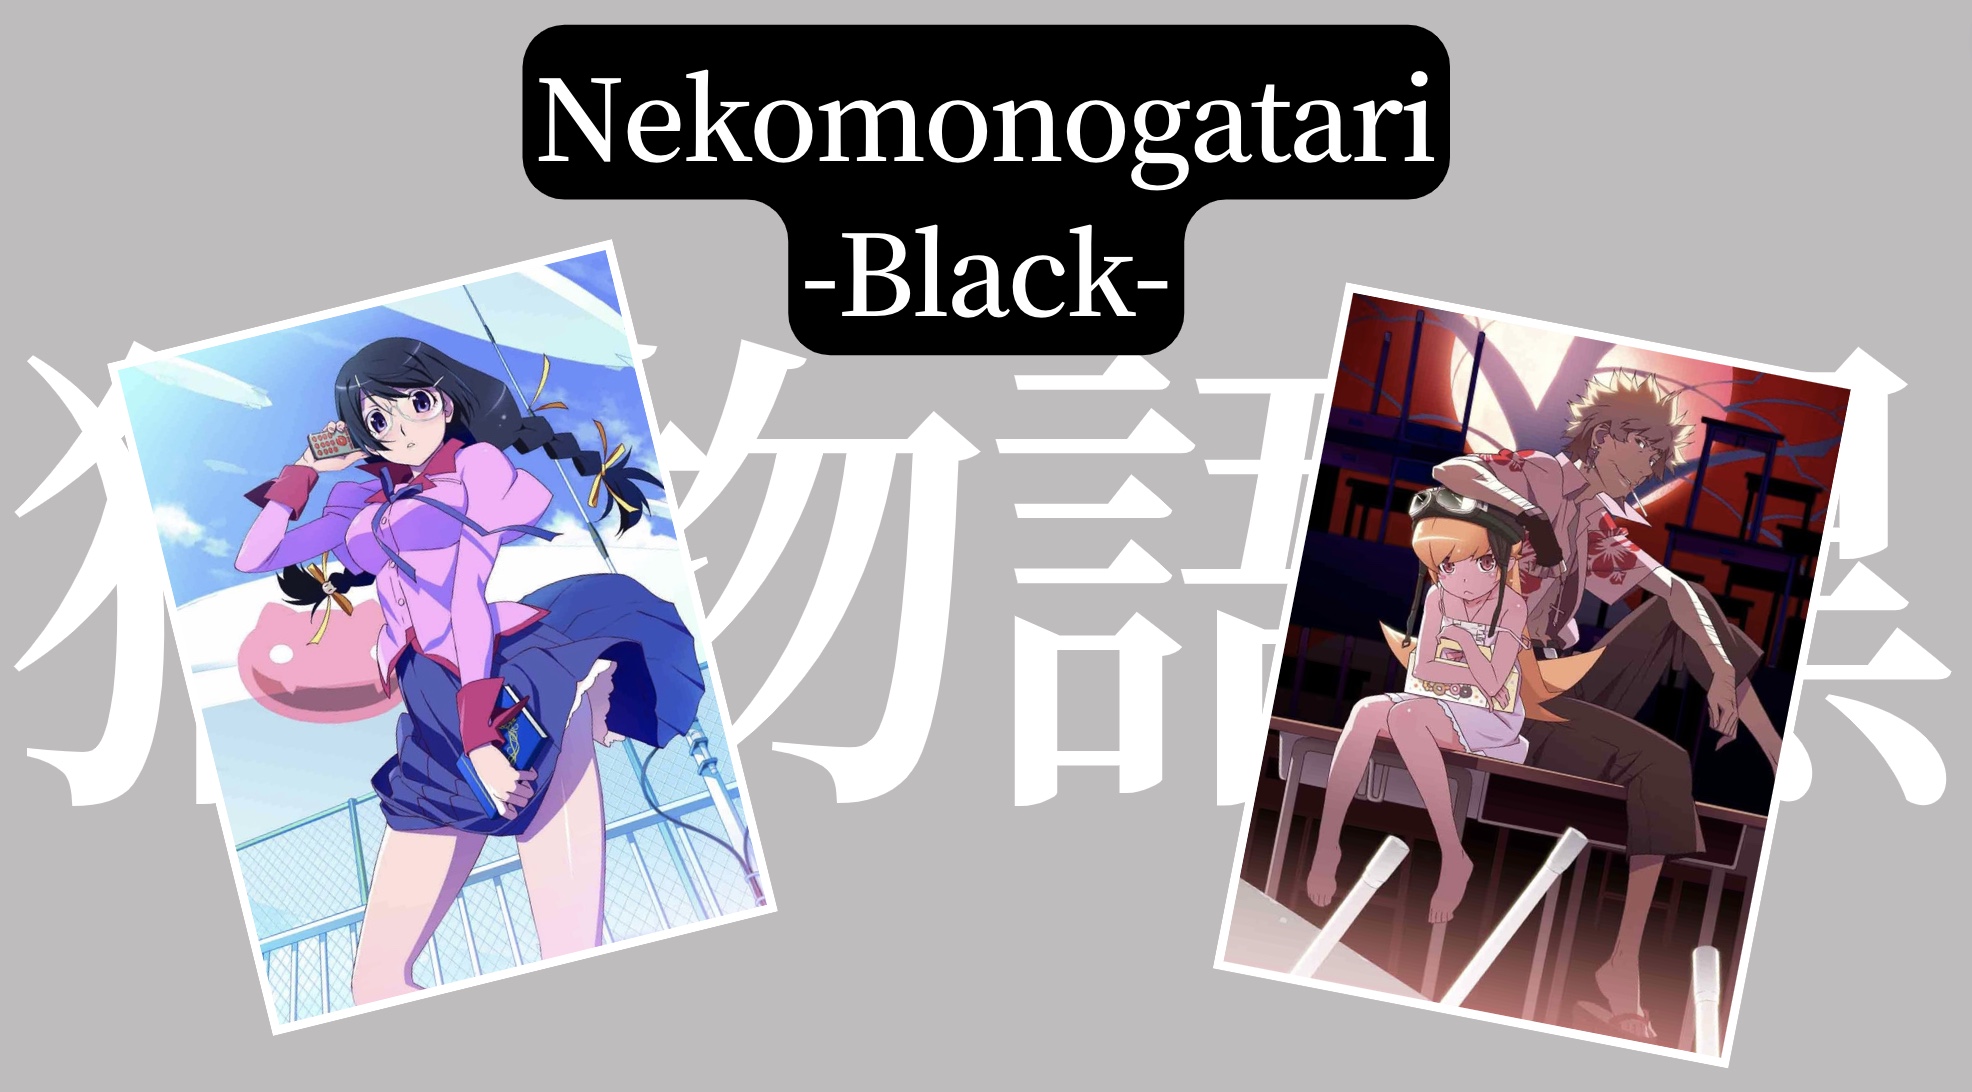 Nekomonogatari (Black)